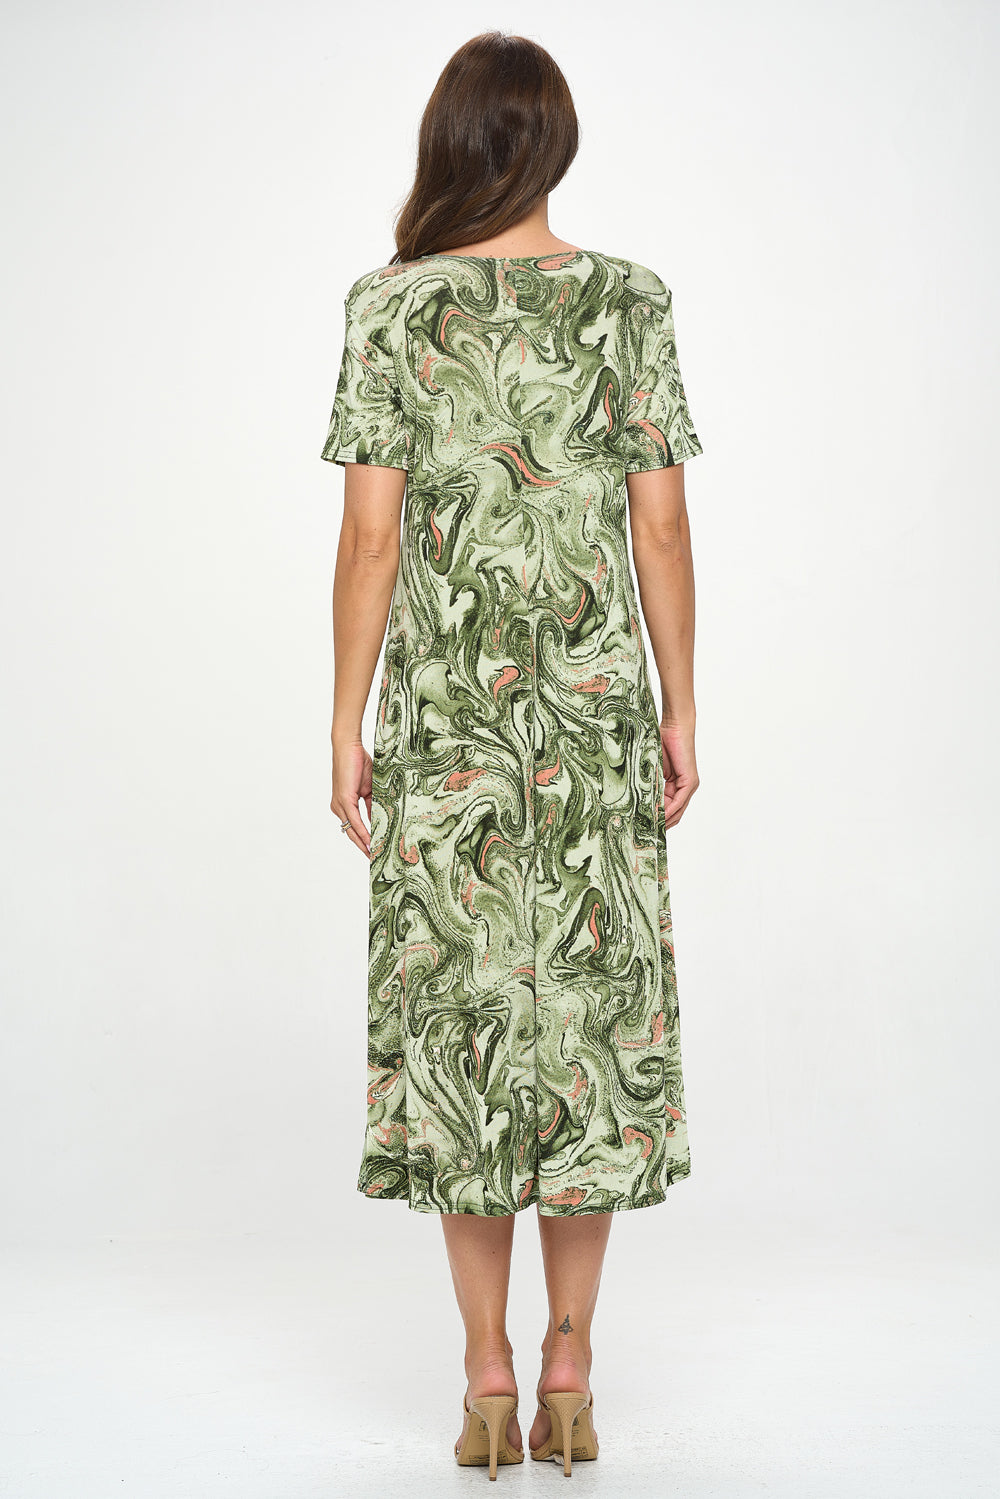 Stretchy Long Dress Short Sleeve Print-7002BN-SRP1-W404